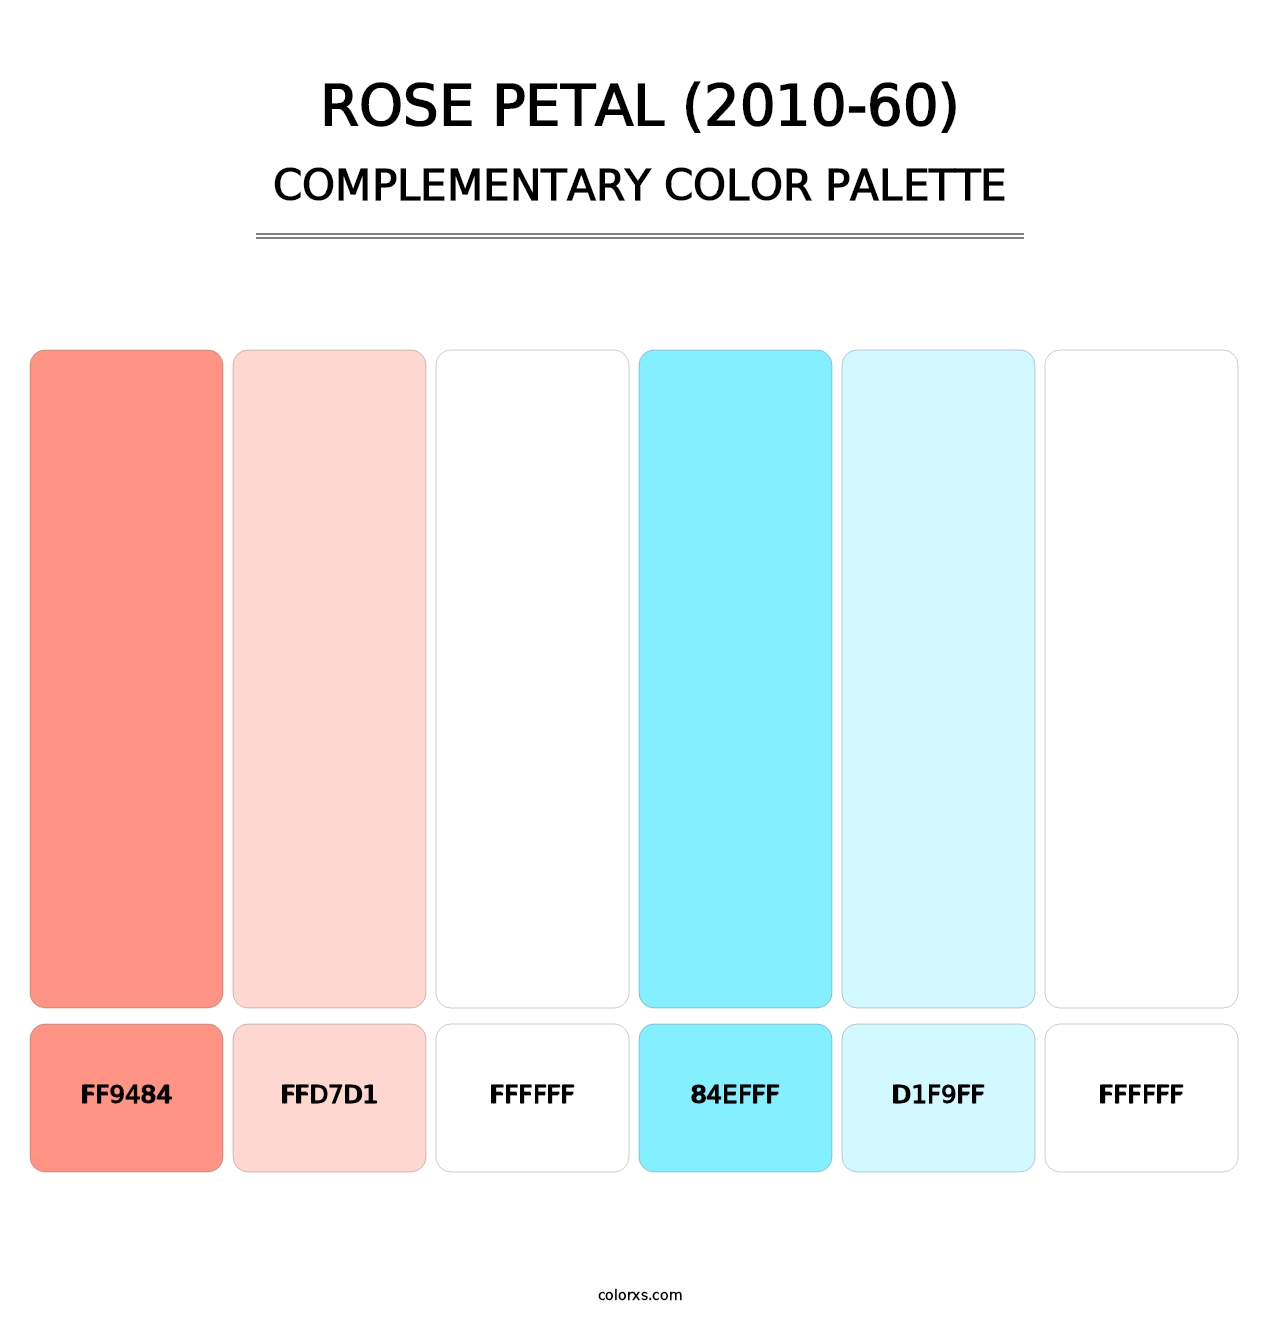 Rose Petal (2010-60) - Complementary Color Palette